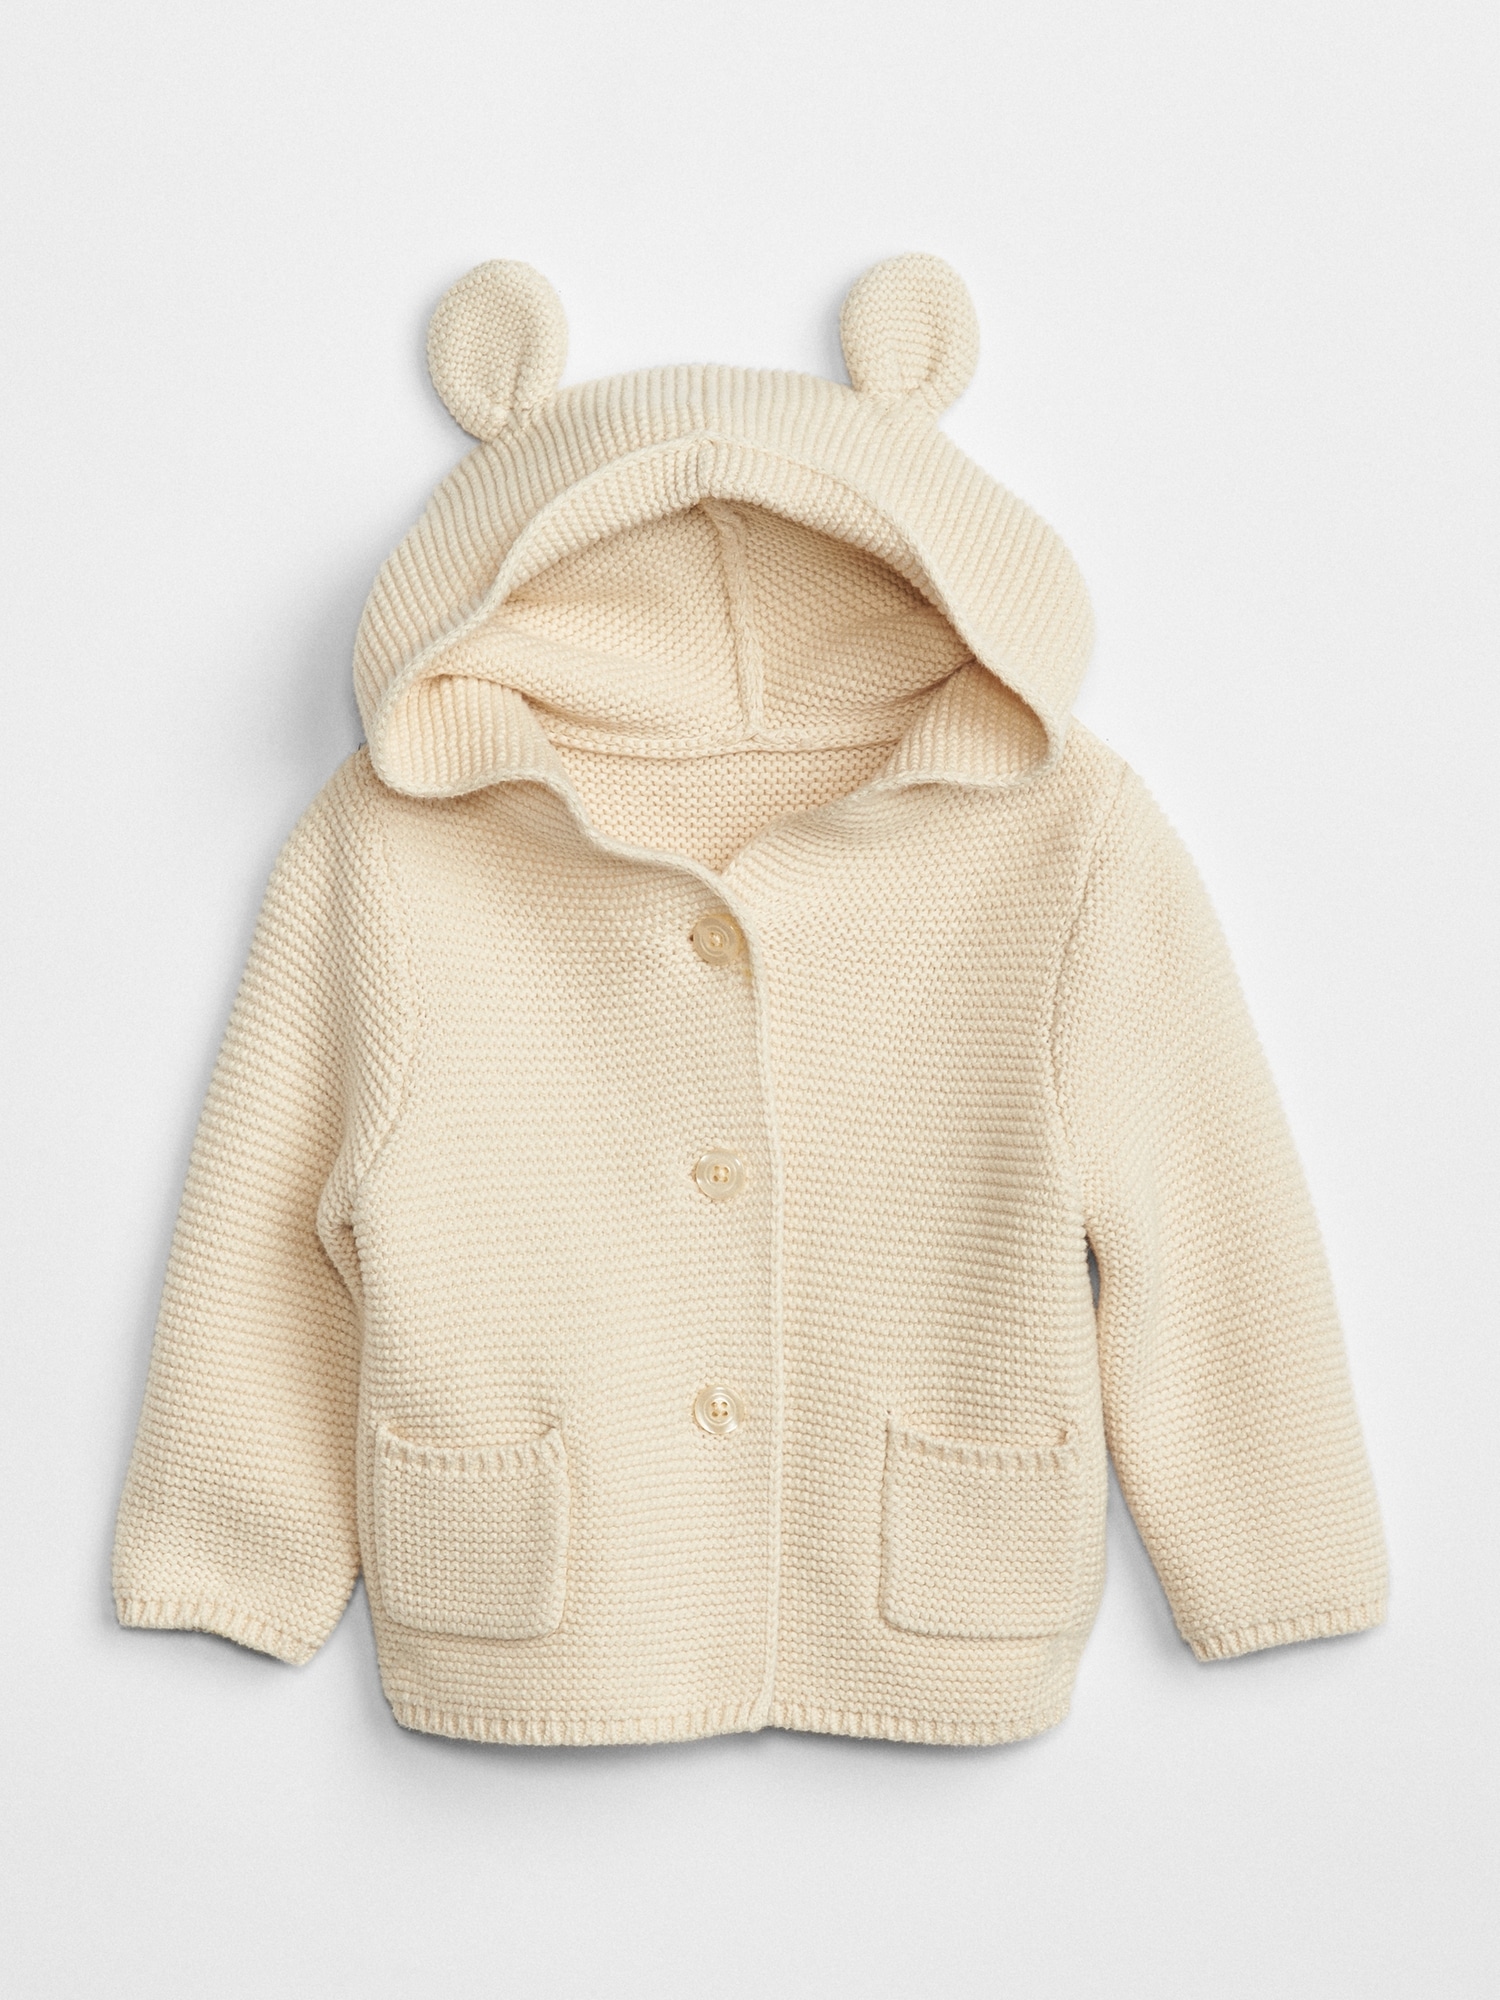 Gap Kids' Baby Brannan Bear Sweater In French Vanilla